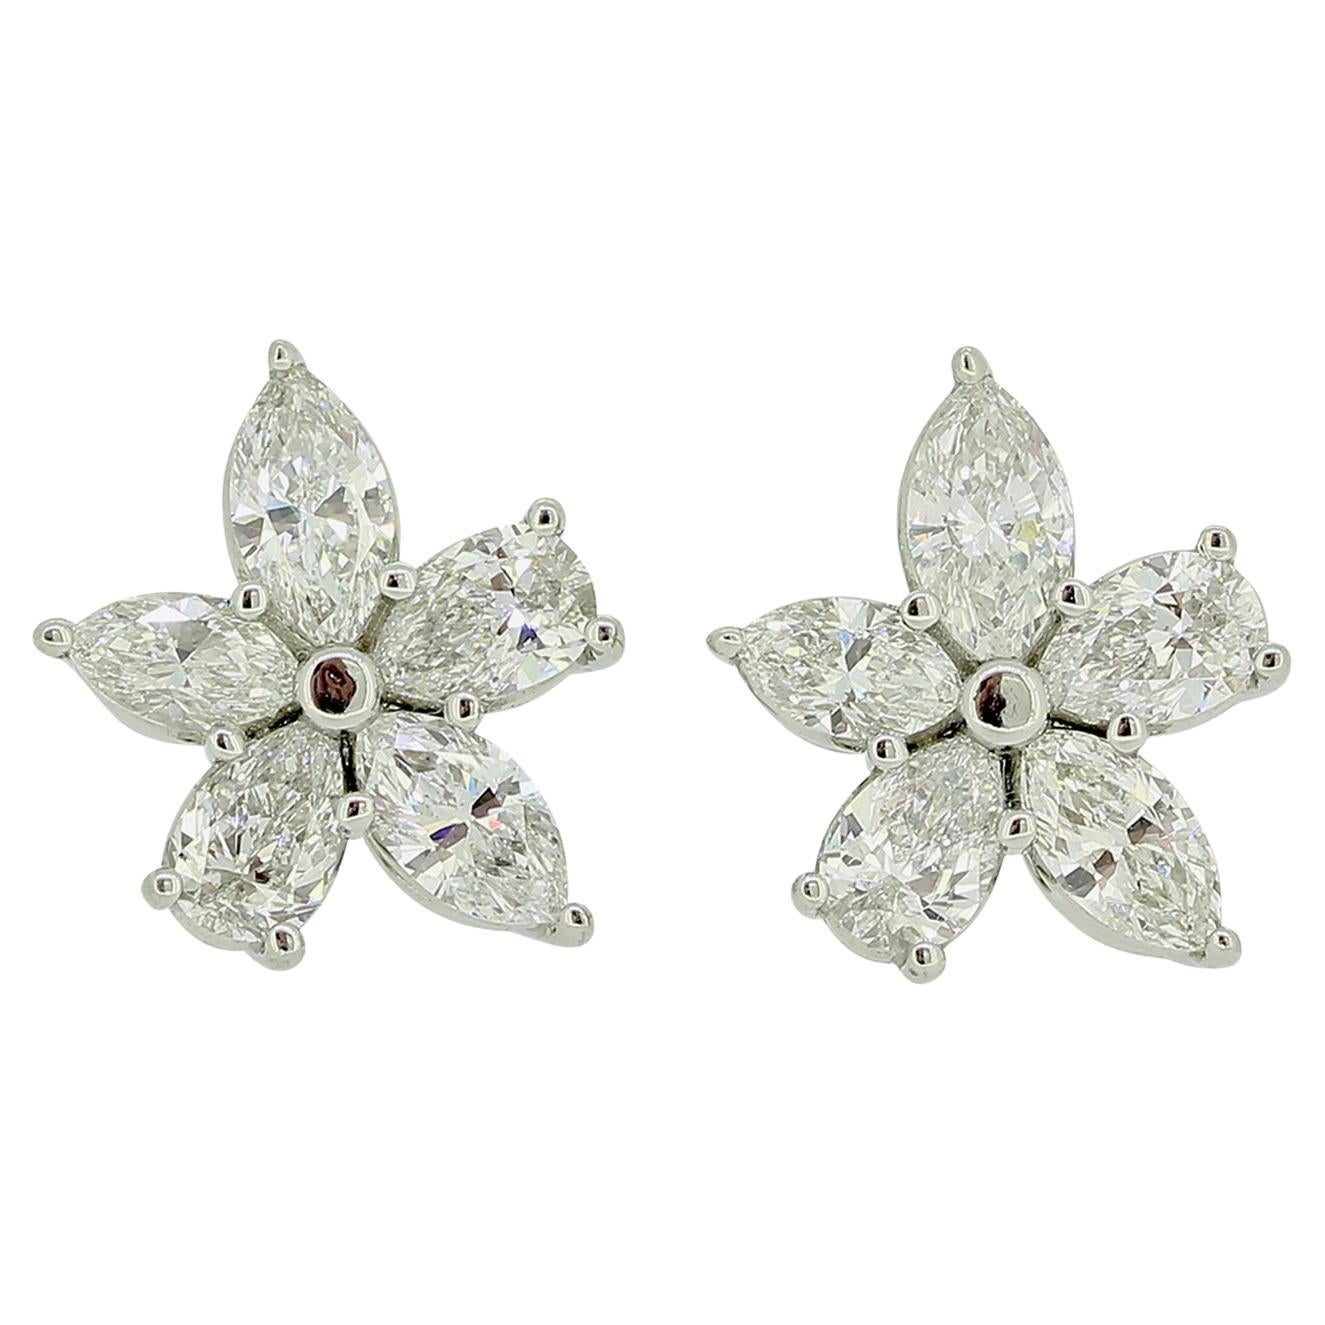 Tiffany & Co. Victoria Mixed Diamond Cluster Earrings